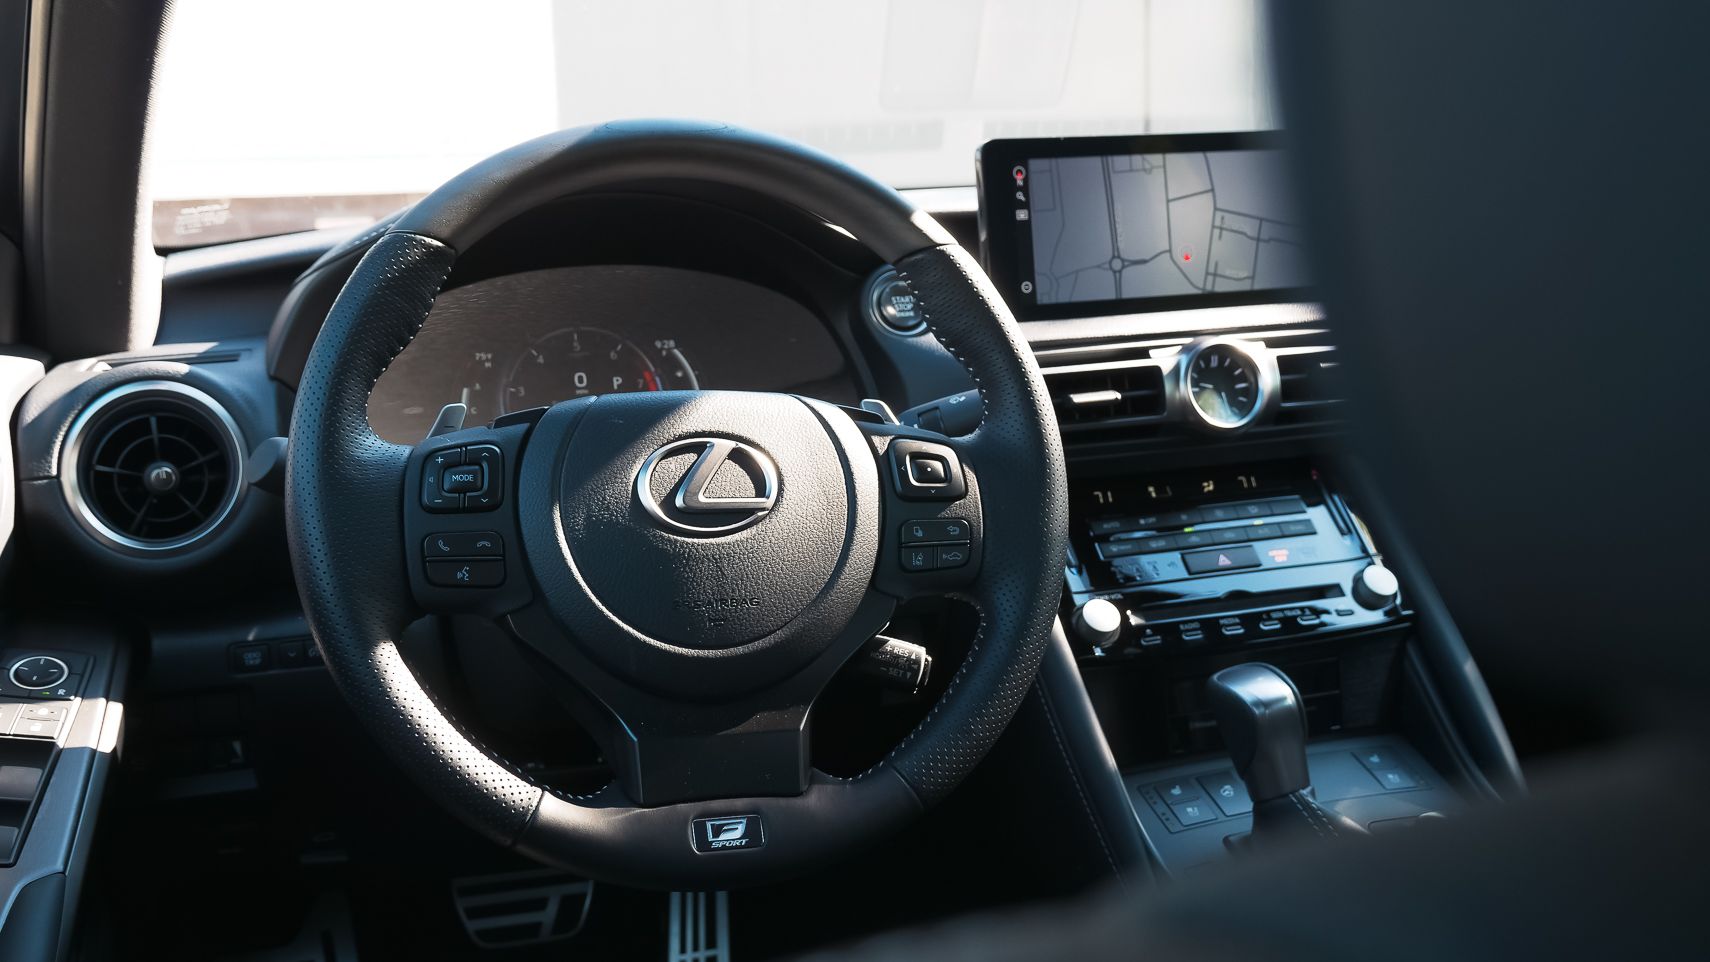  2022 Lexus IS350 F SPORT steering wheel and dash